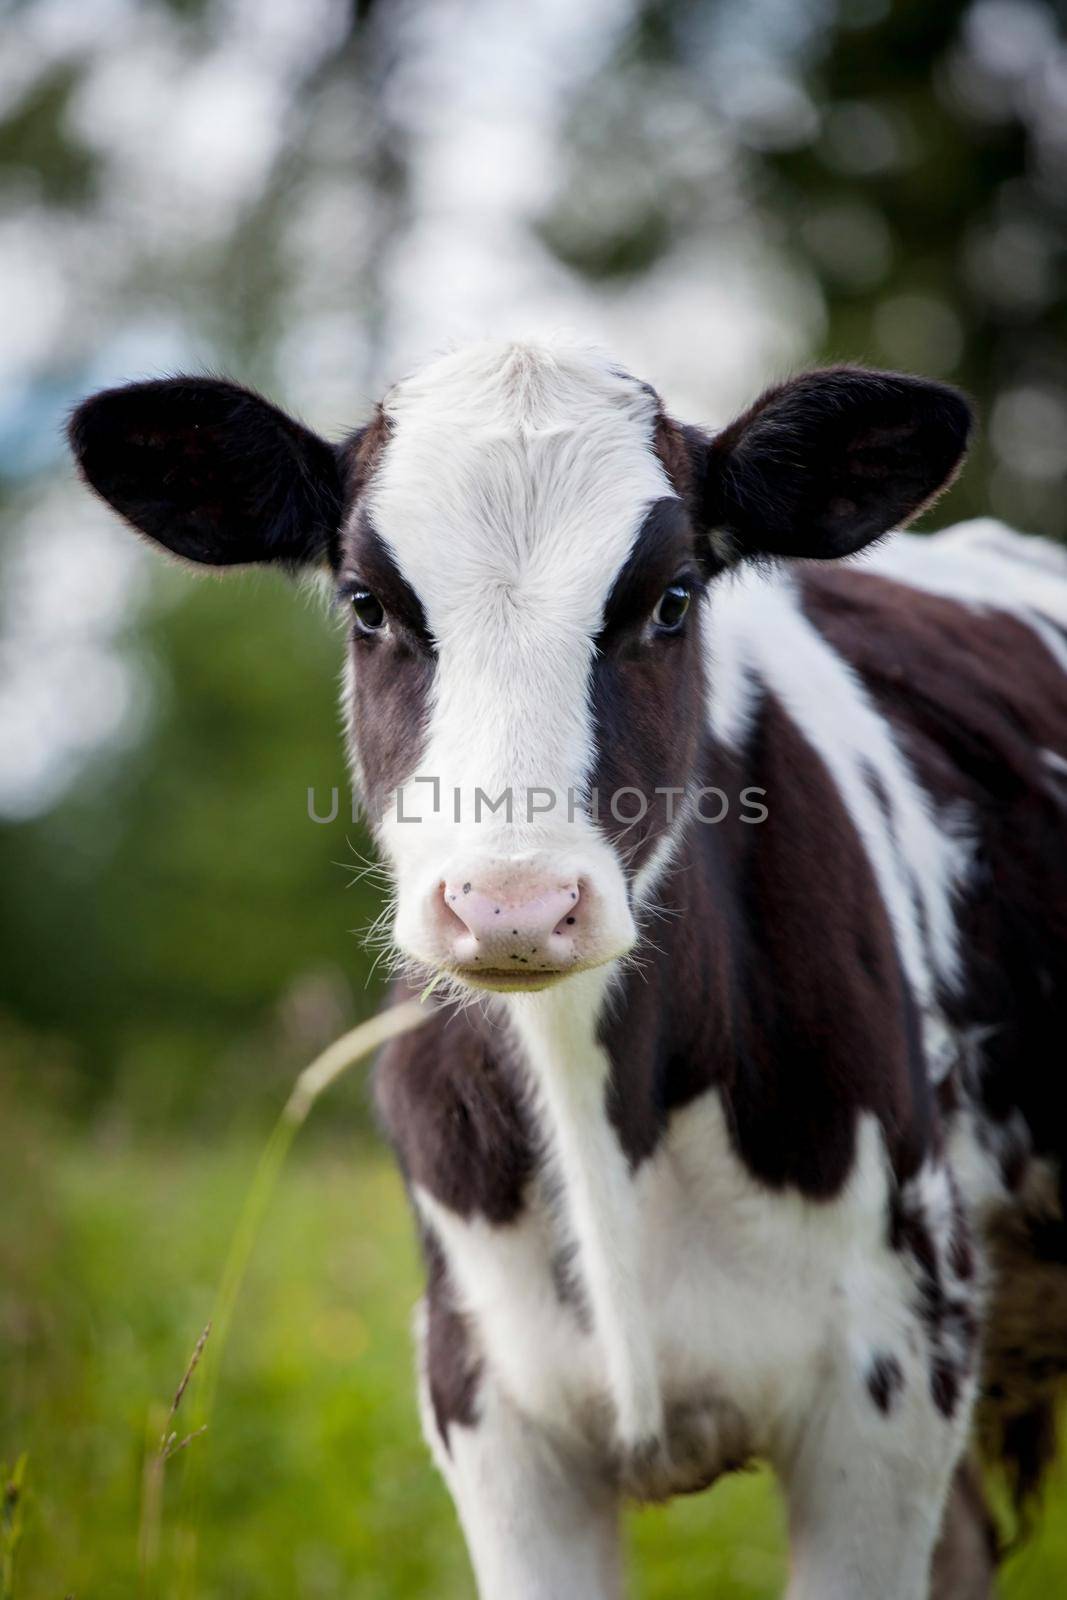 Newborn calf on green grass by RosaJay